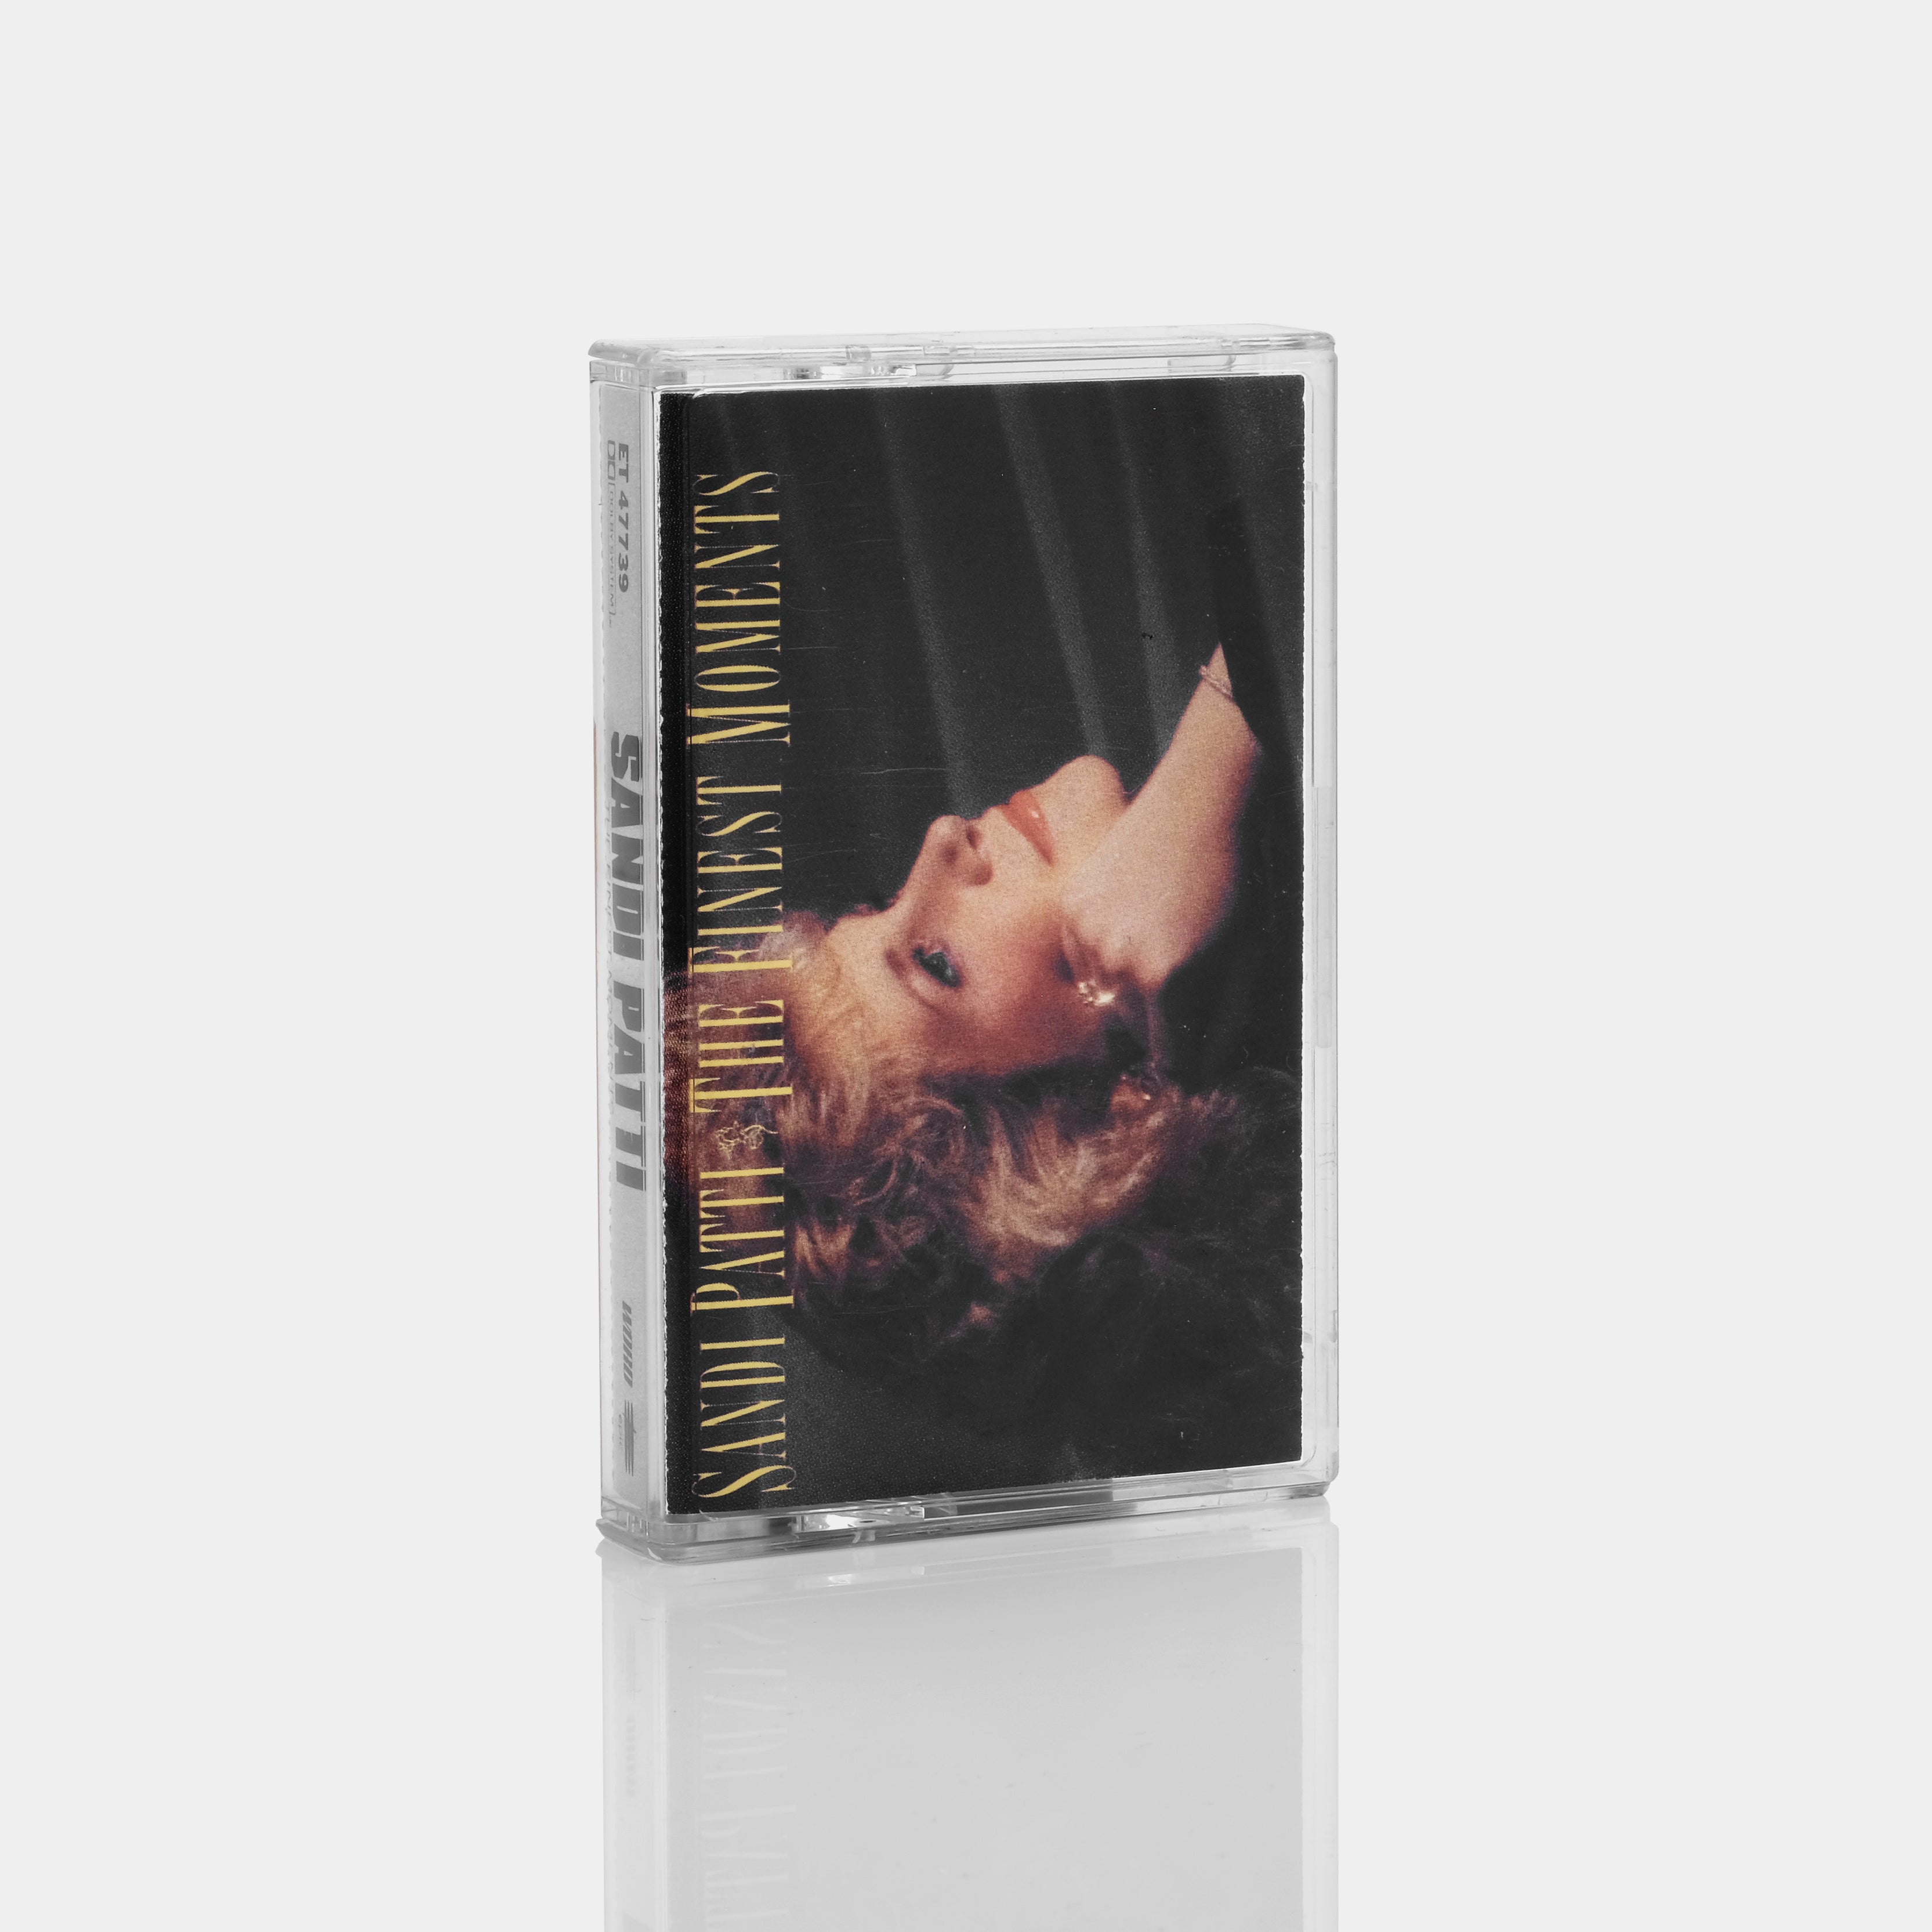 Sandi Patti - The Finest Moments Cassette Tape